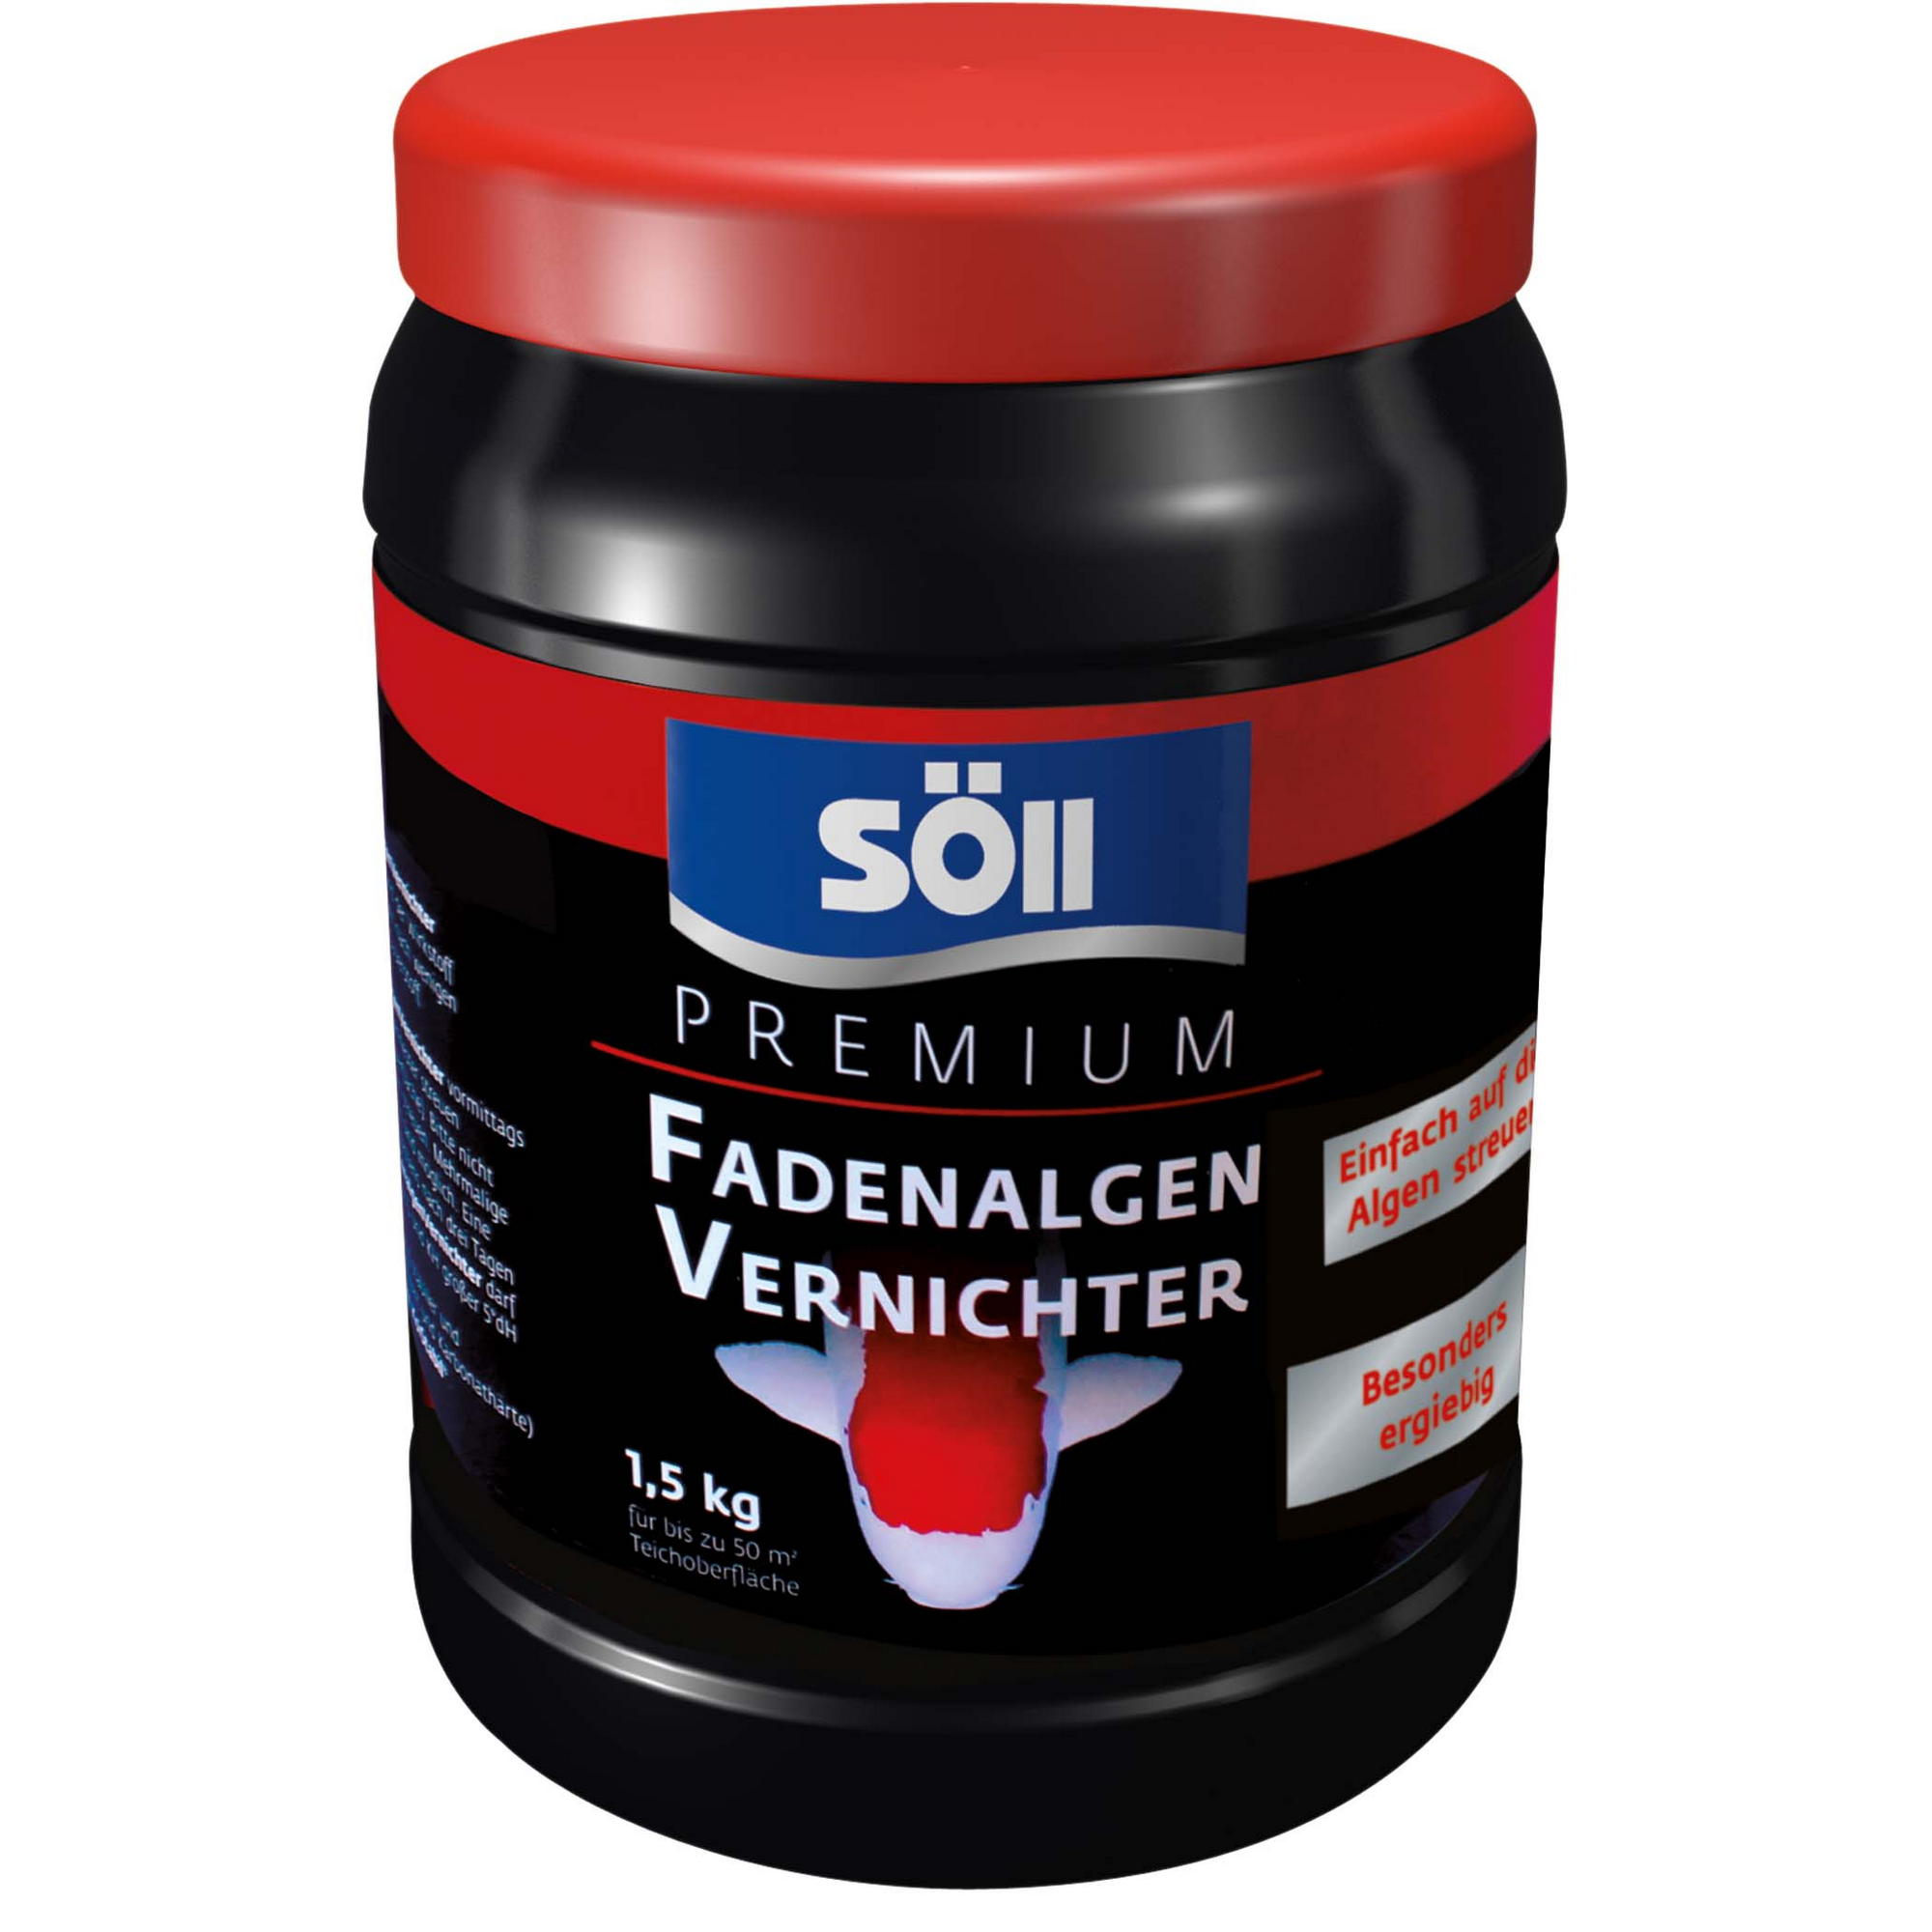 Premium Fadenalgen-Vernichter 1,5 kg + product picture